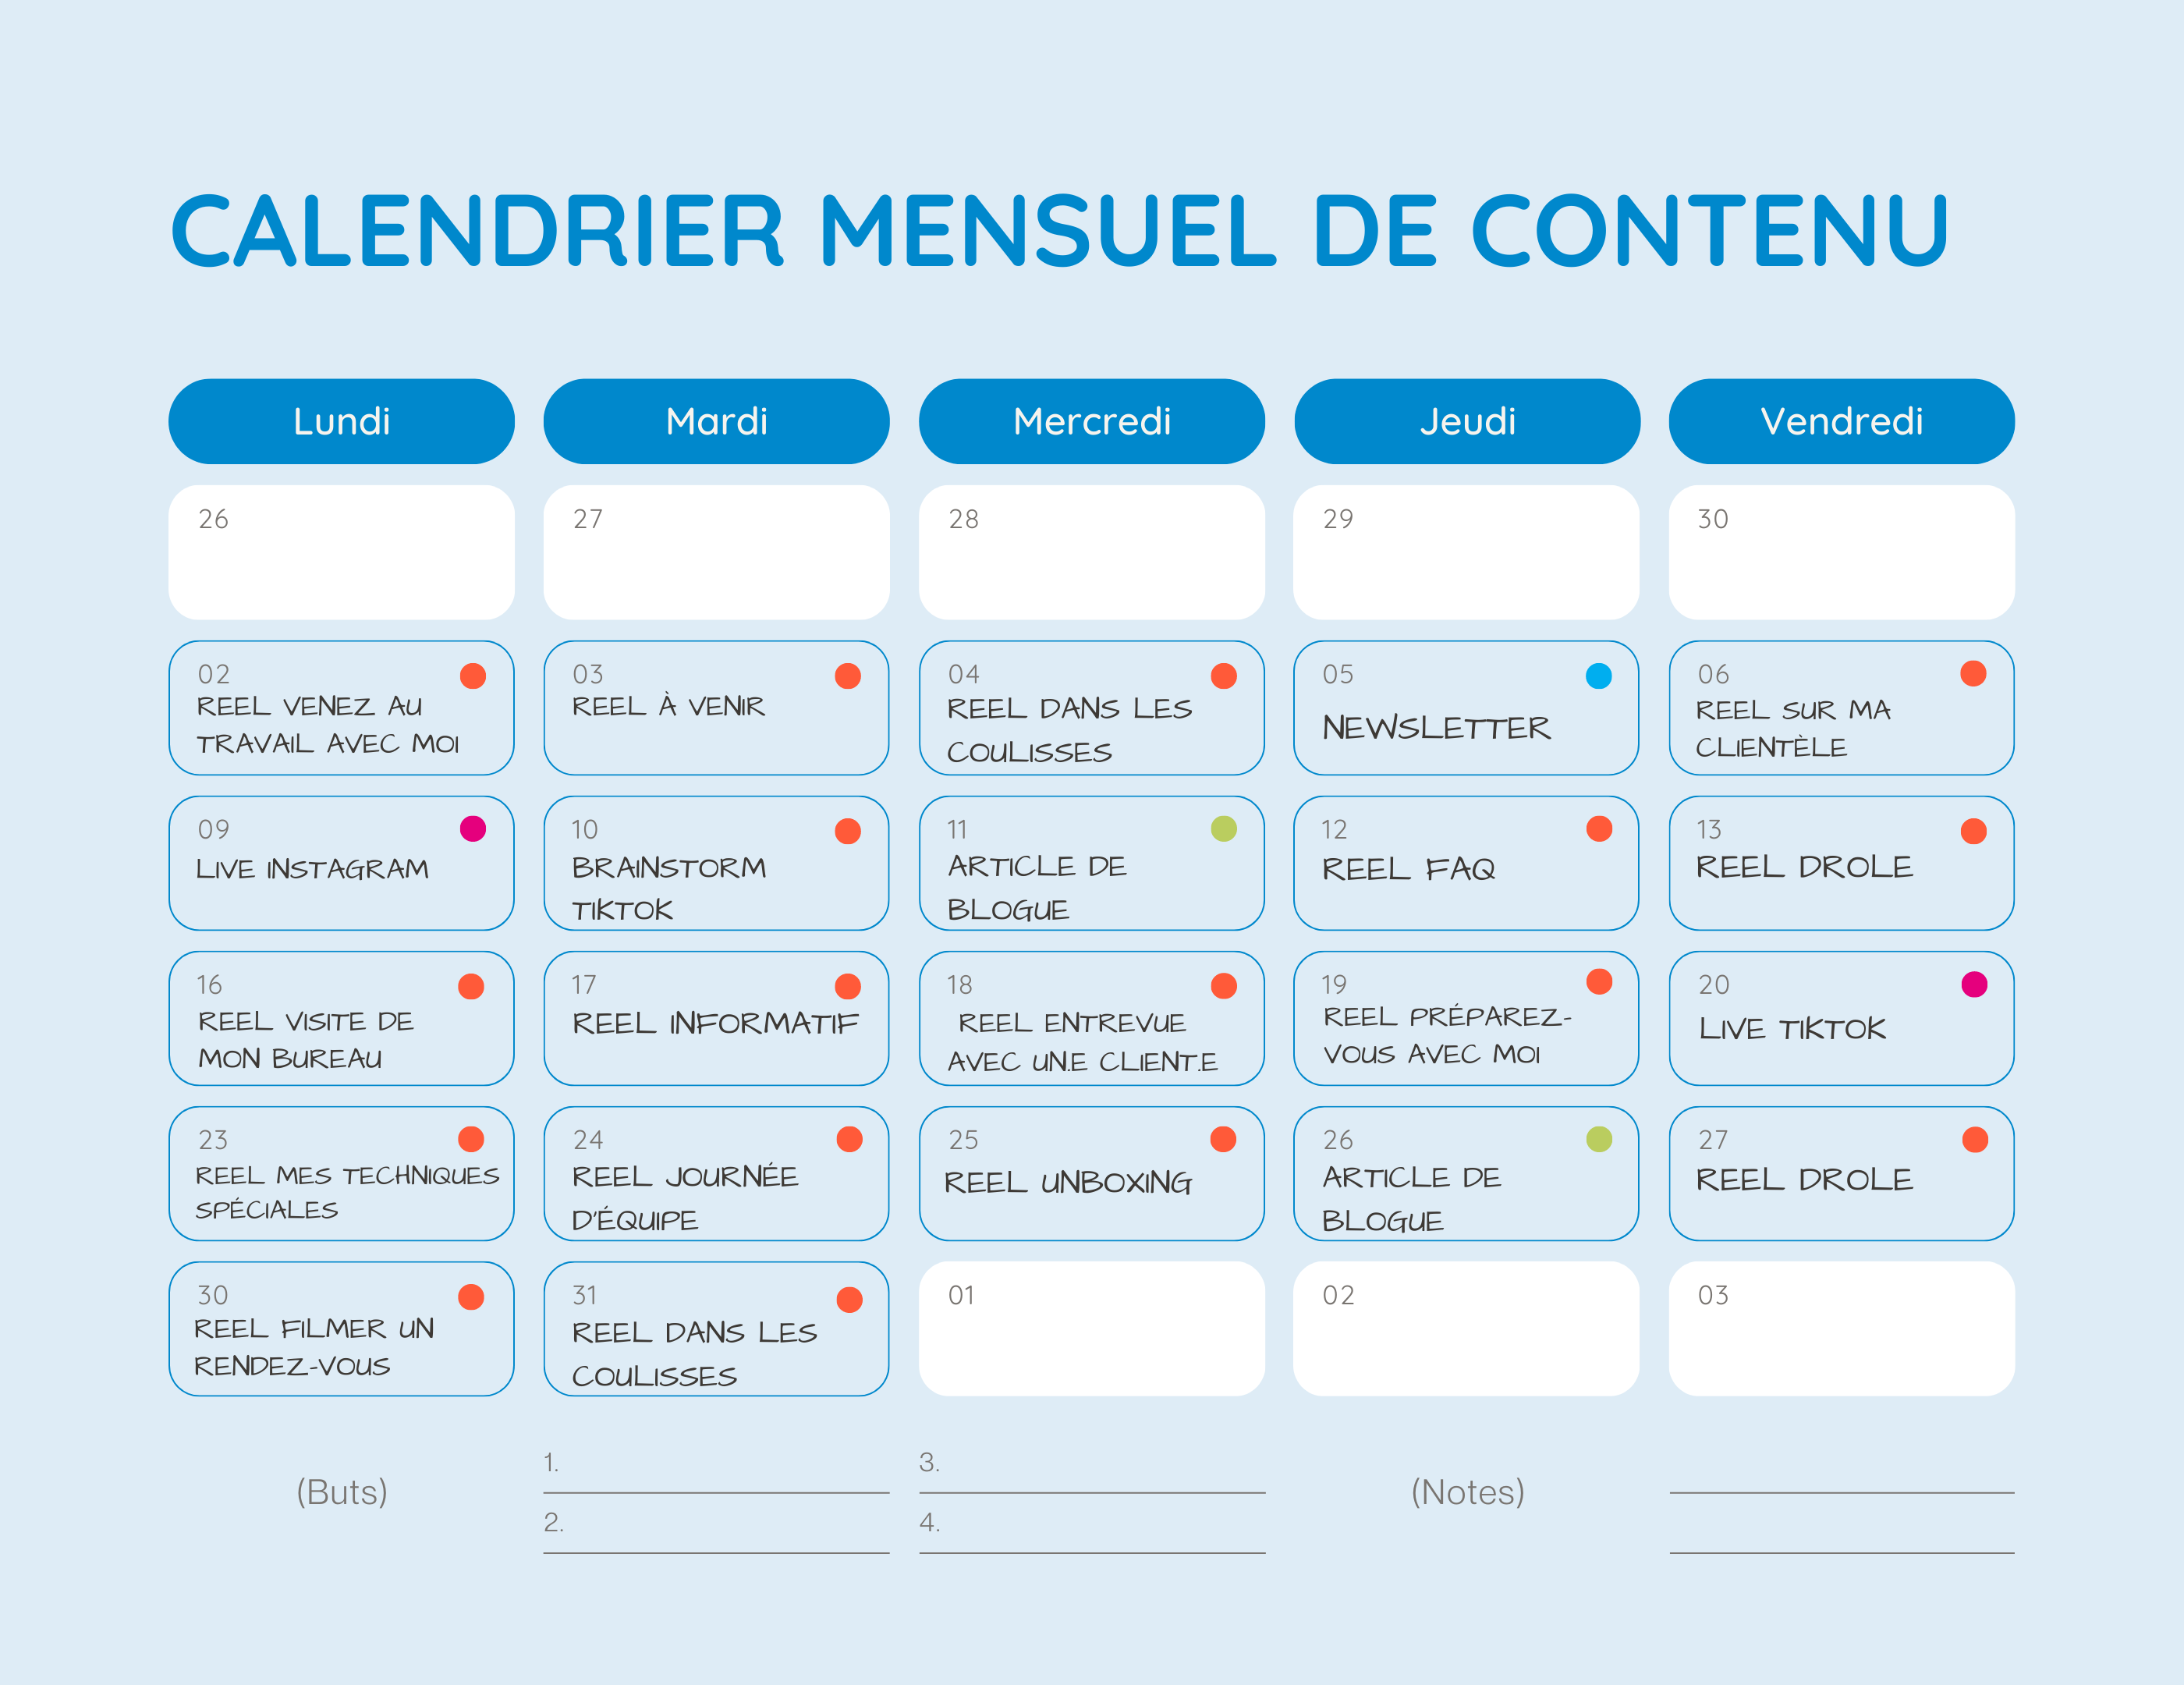 Image d'un calendrier mensuel de contenu